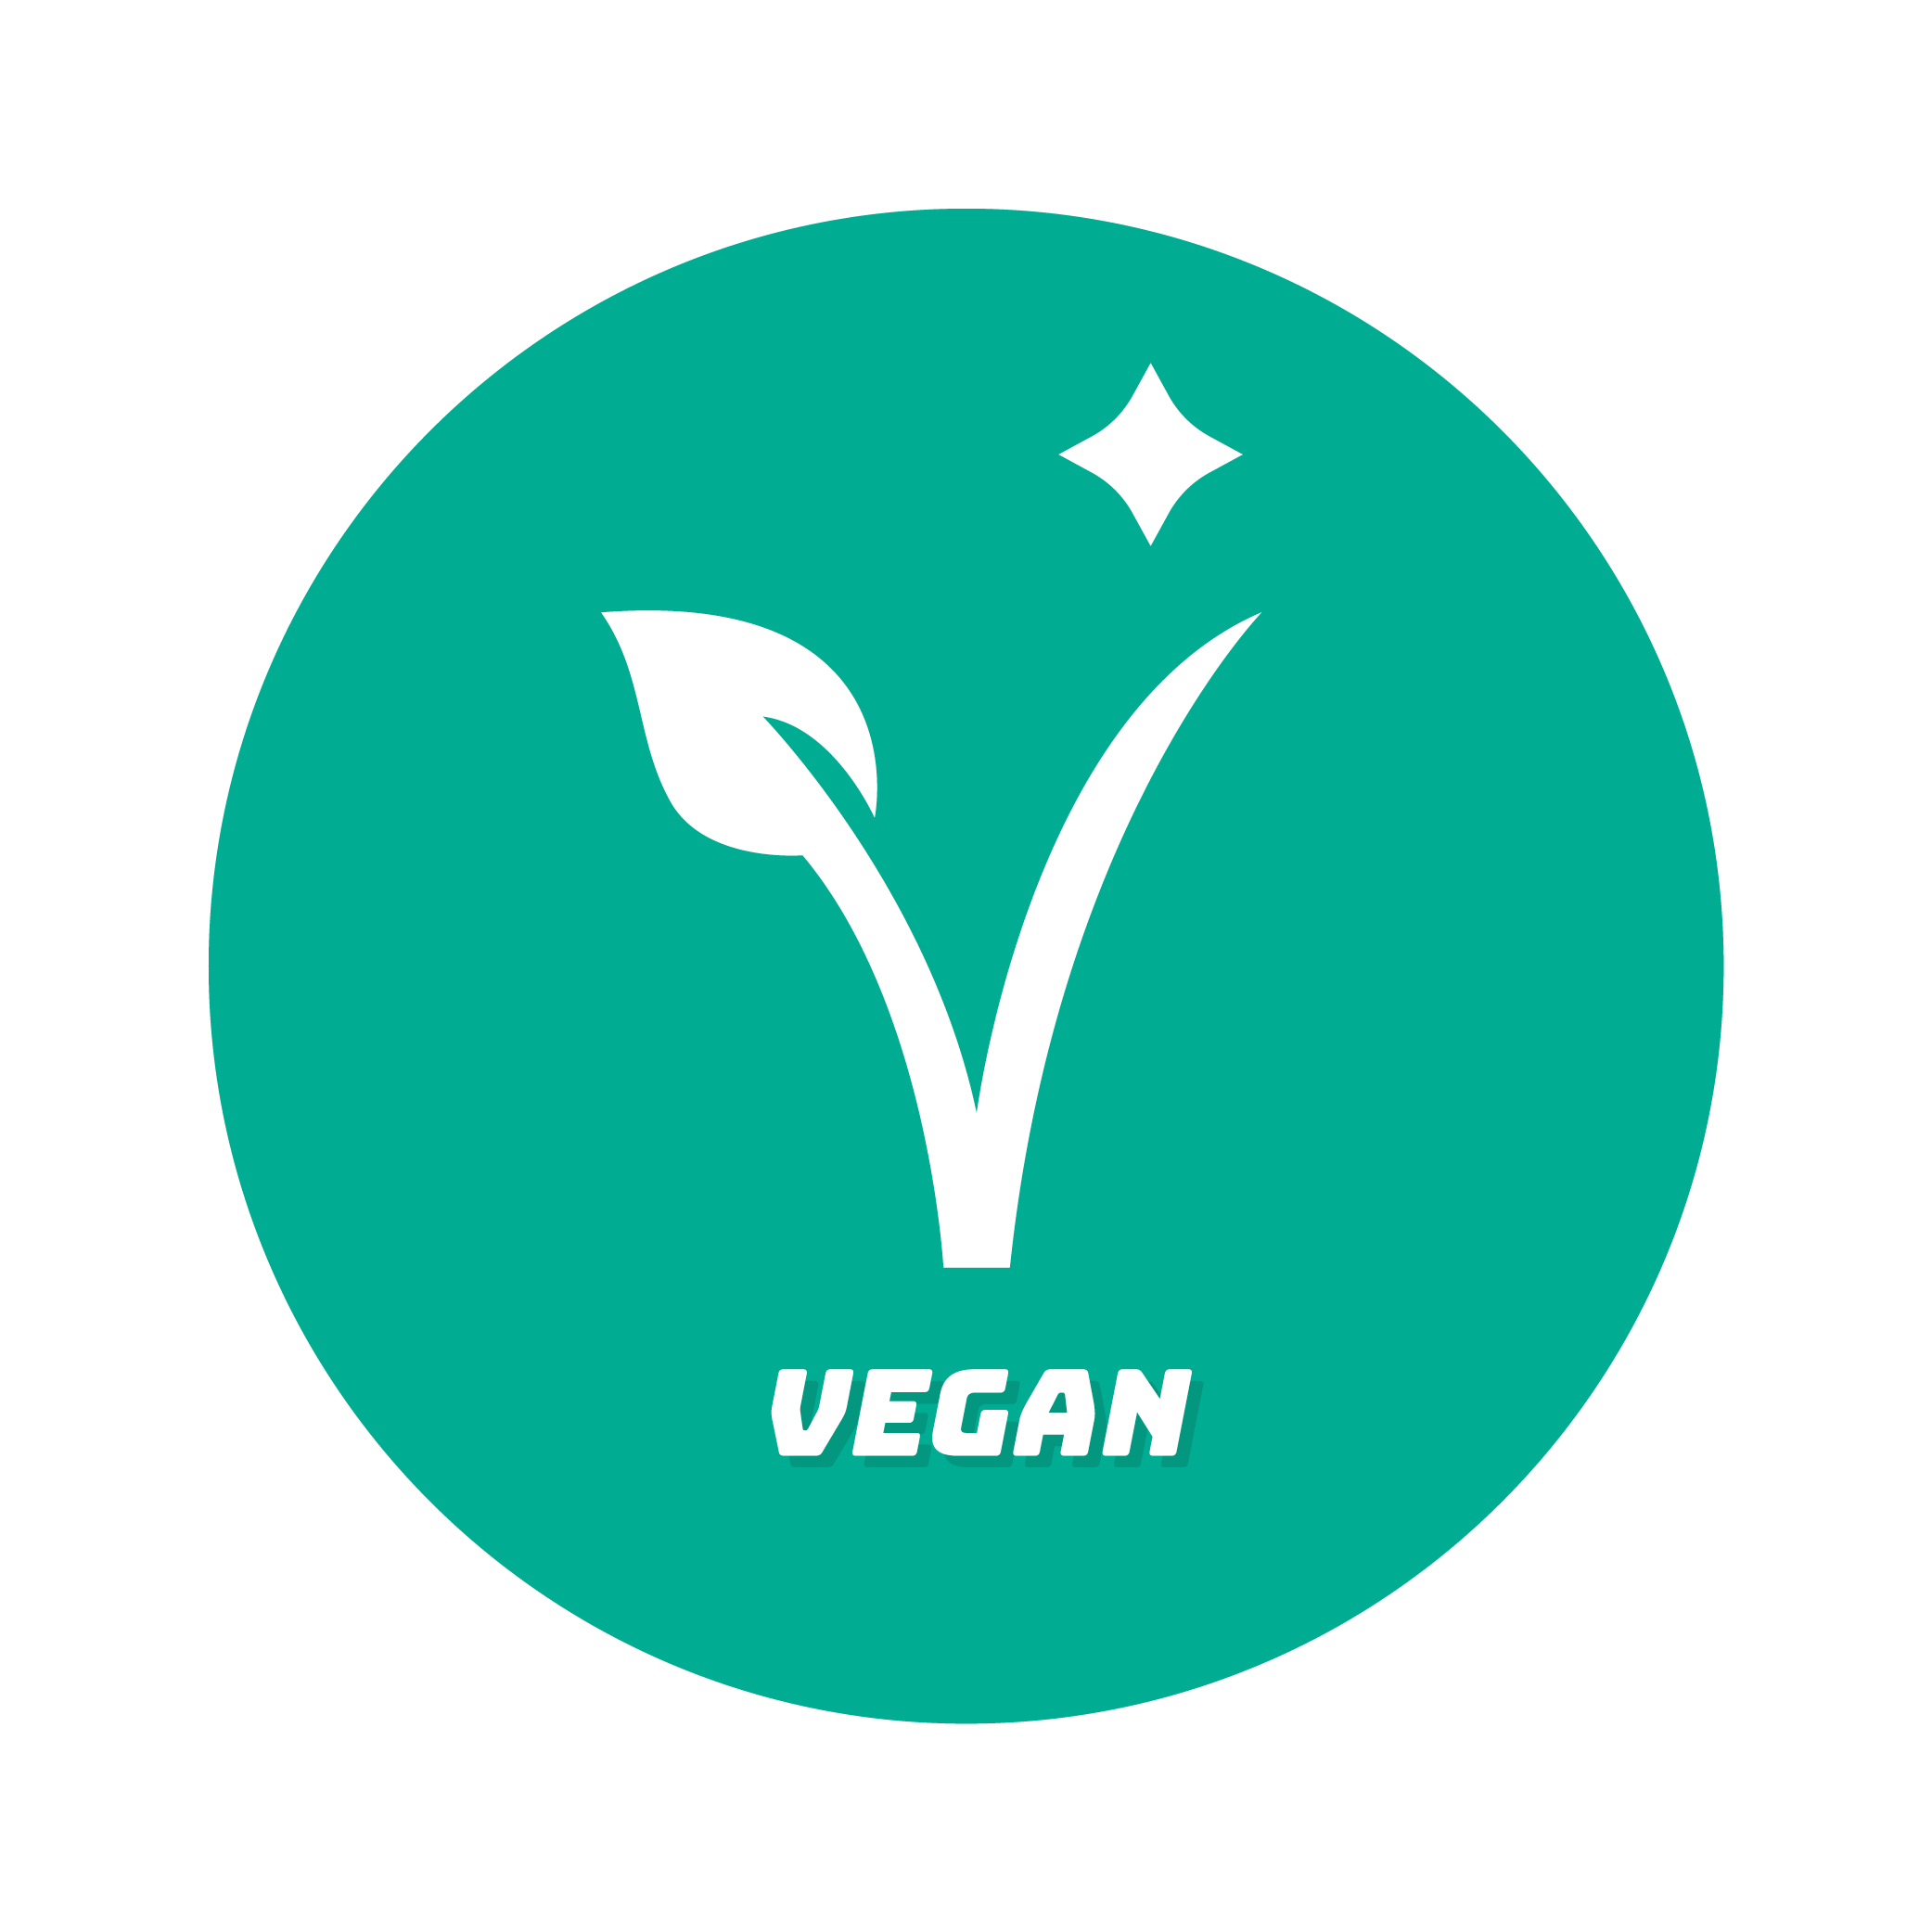 an icon of a V, symbolizing vegan.